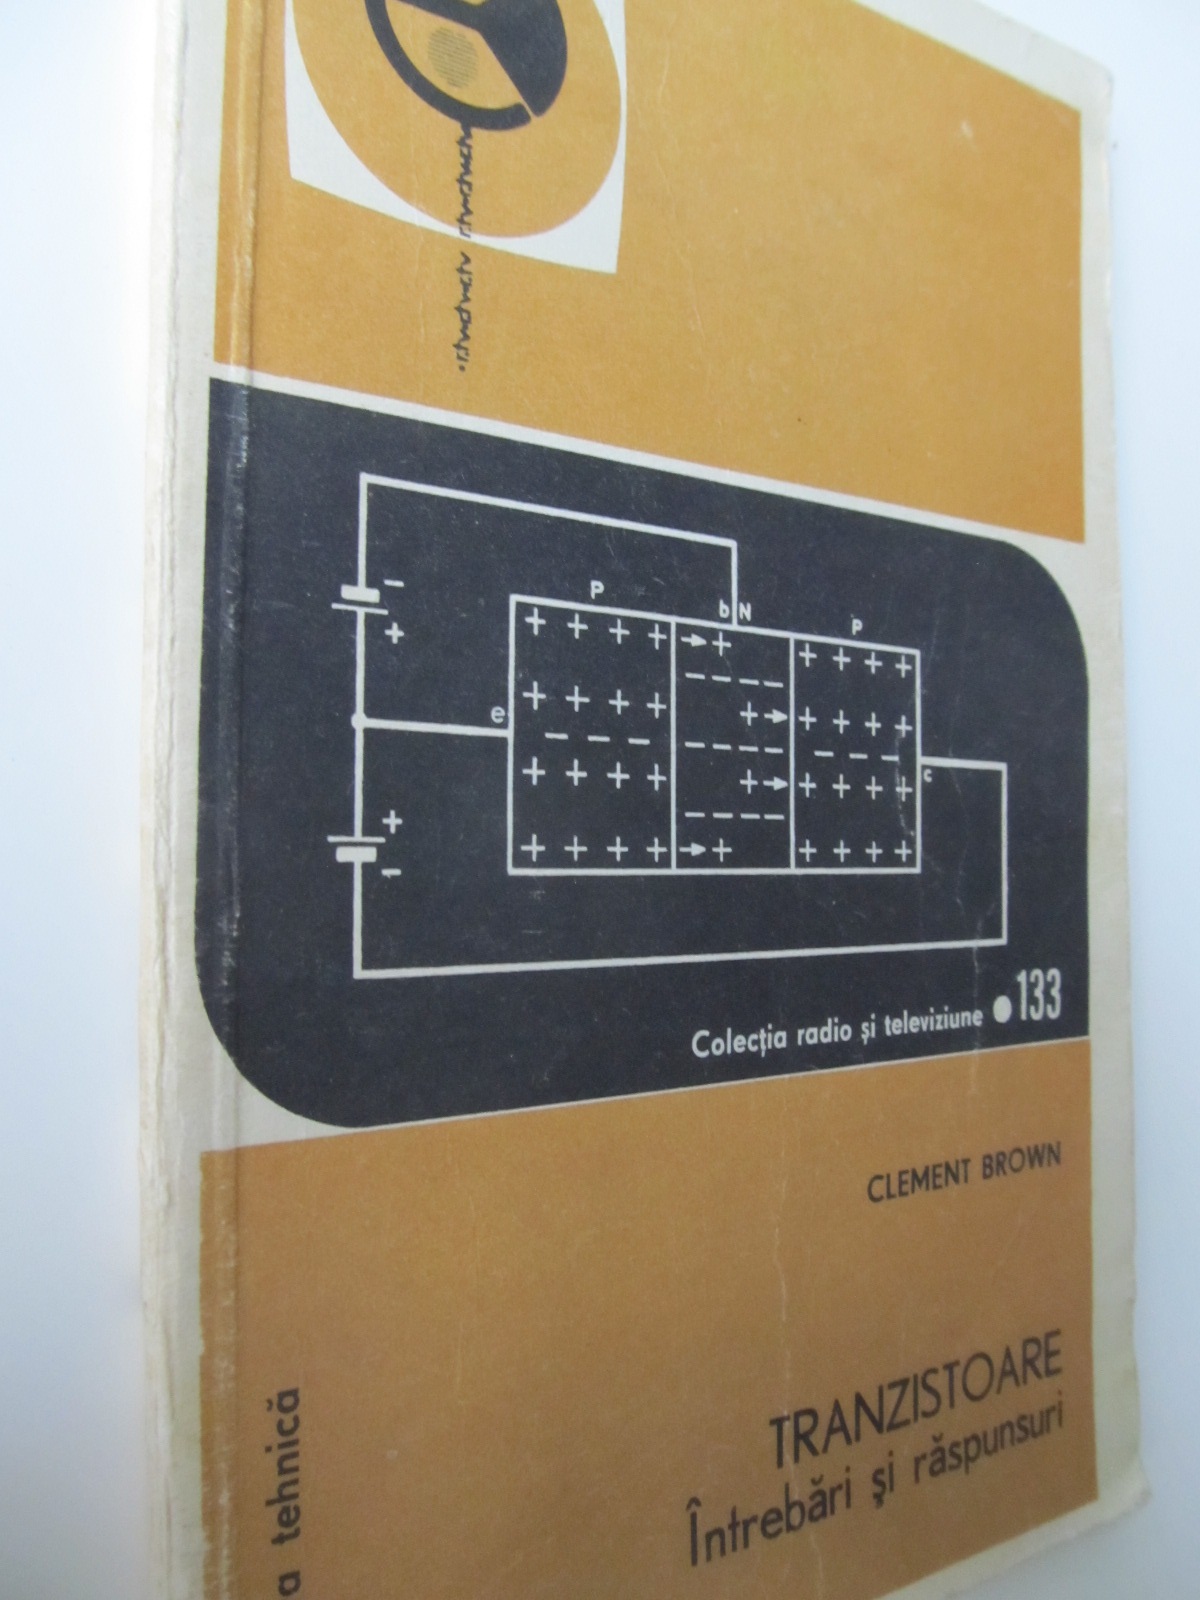 Tranzistoare - intrebari si raspunsuri - Clement Brown | Detalii carte